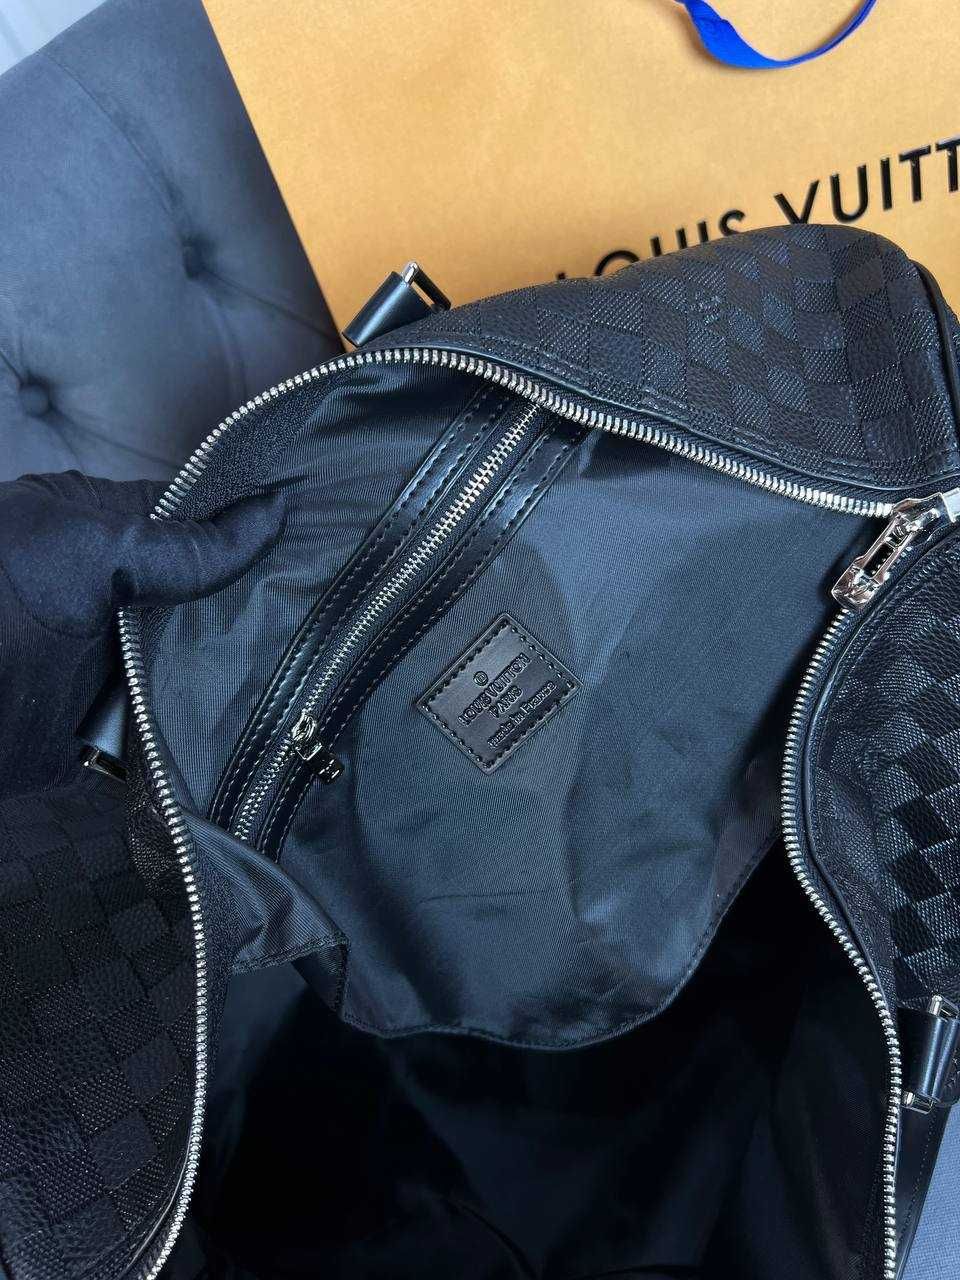 Дорожная сумка Louis Vuitton кожаная сумка для багажа Луи Виттон c136